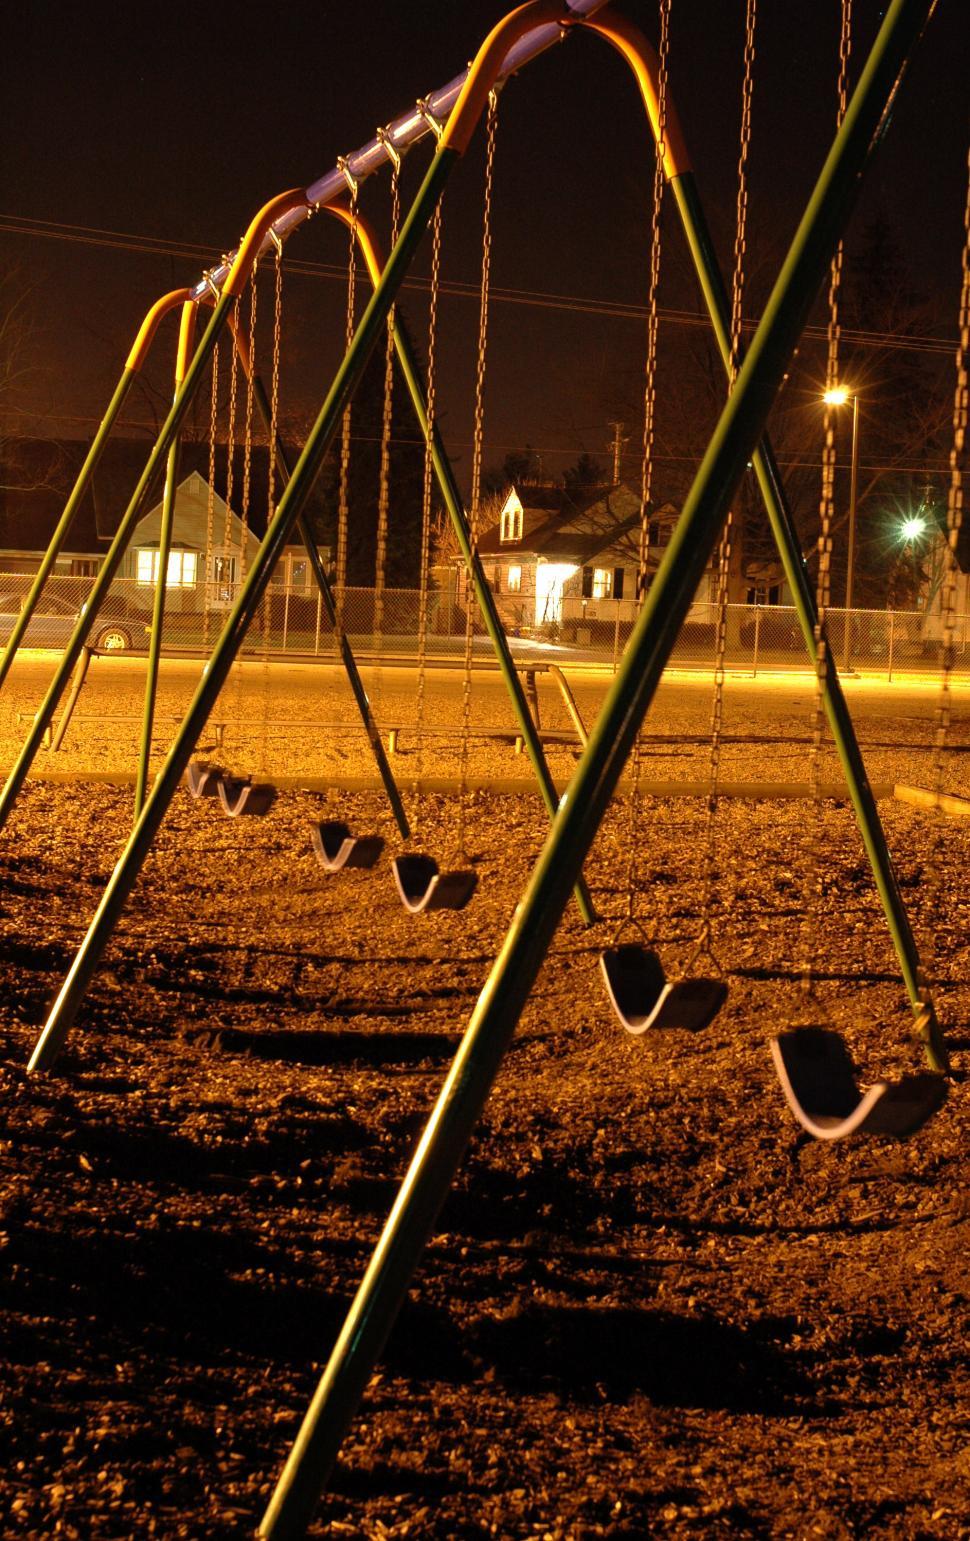 Free Image of Swings at night 